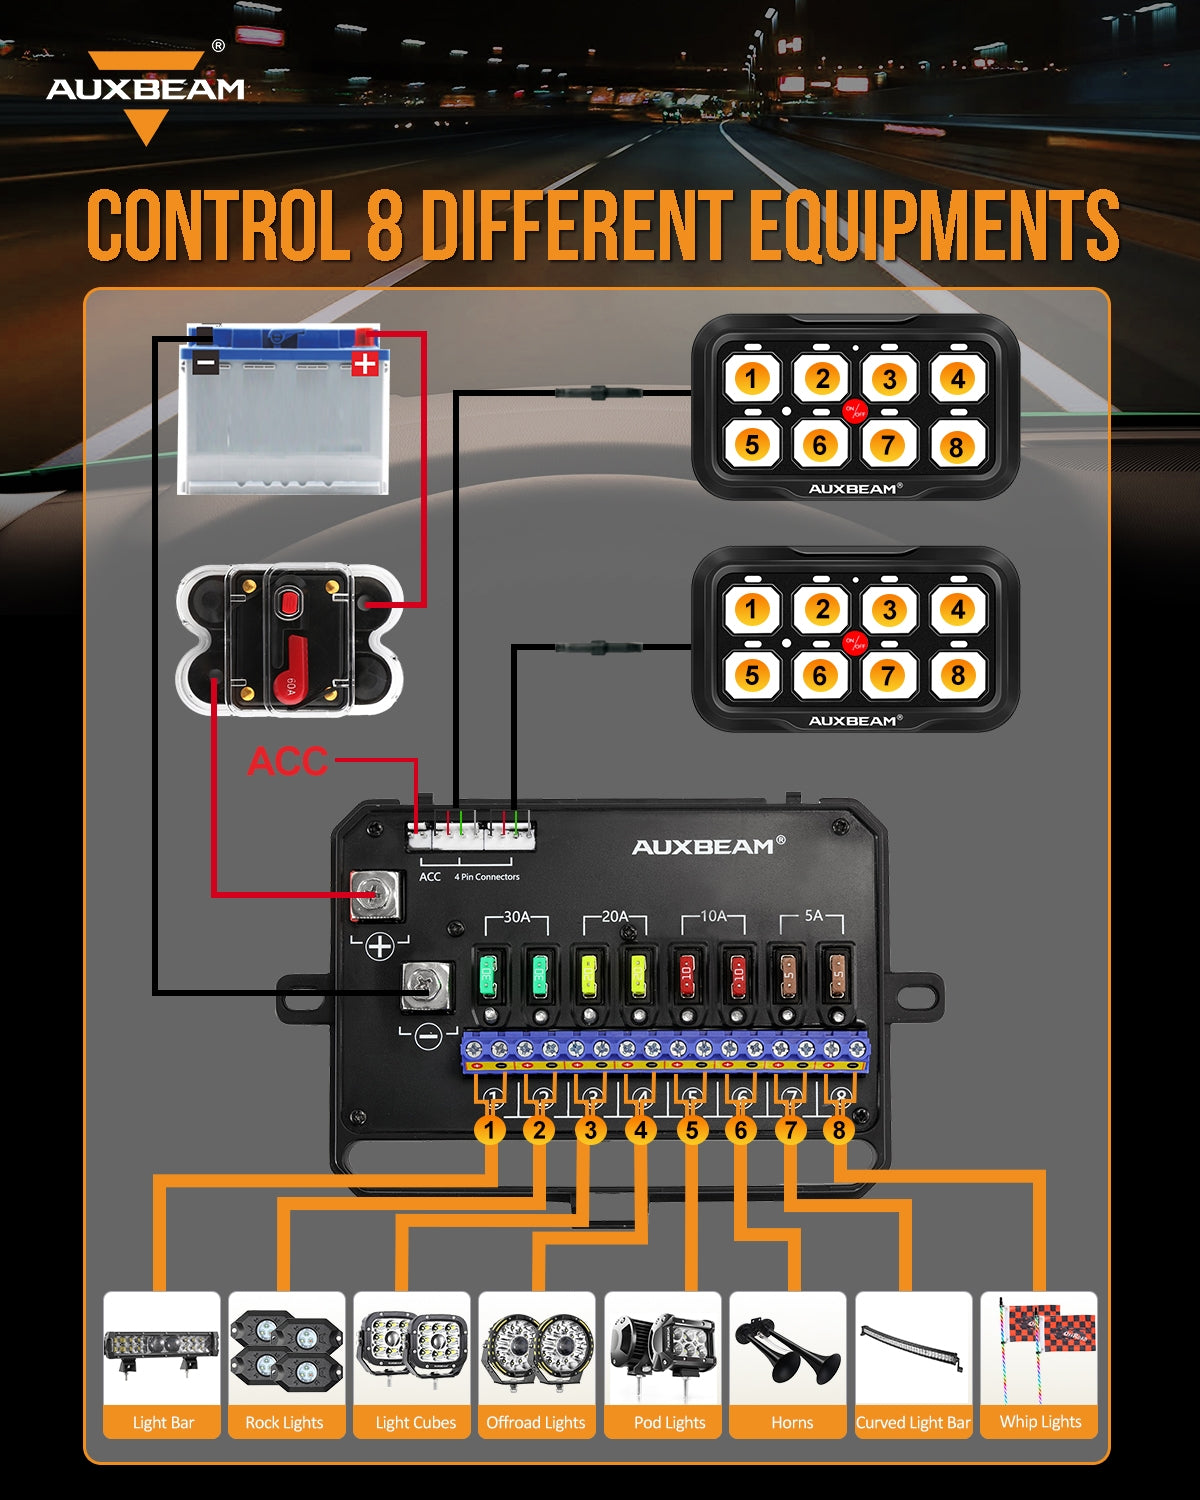 Doble Panel de interruptores RGB SERIES 8 GANG LED Auxbeam Switch Panel